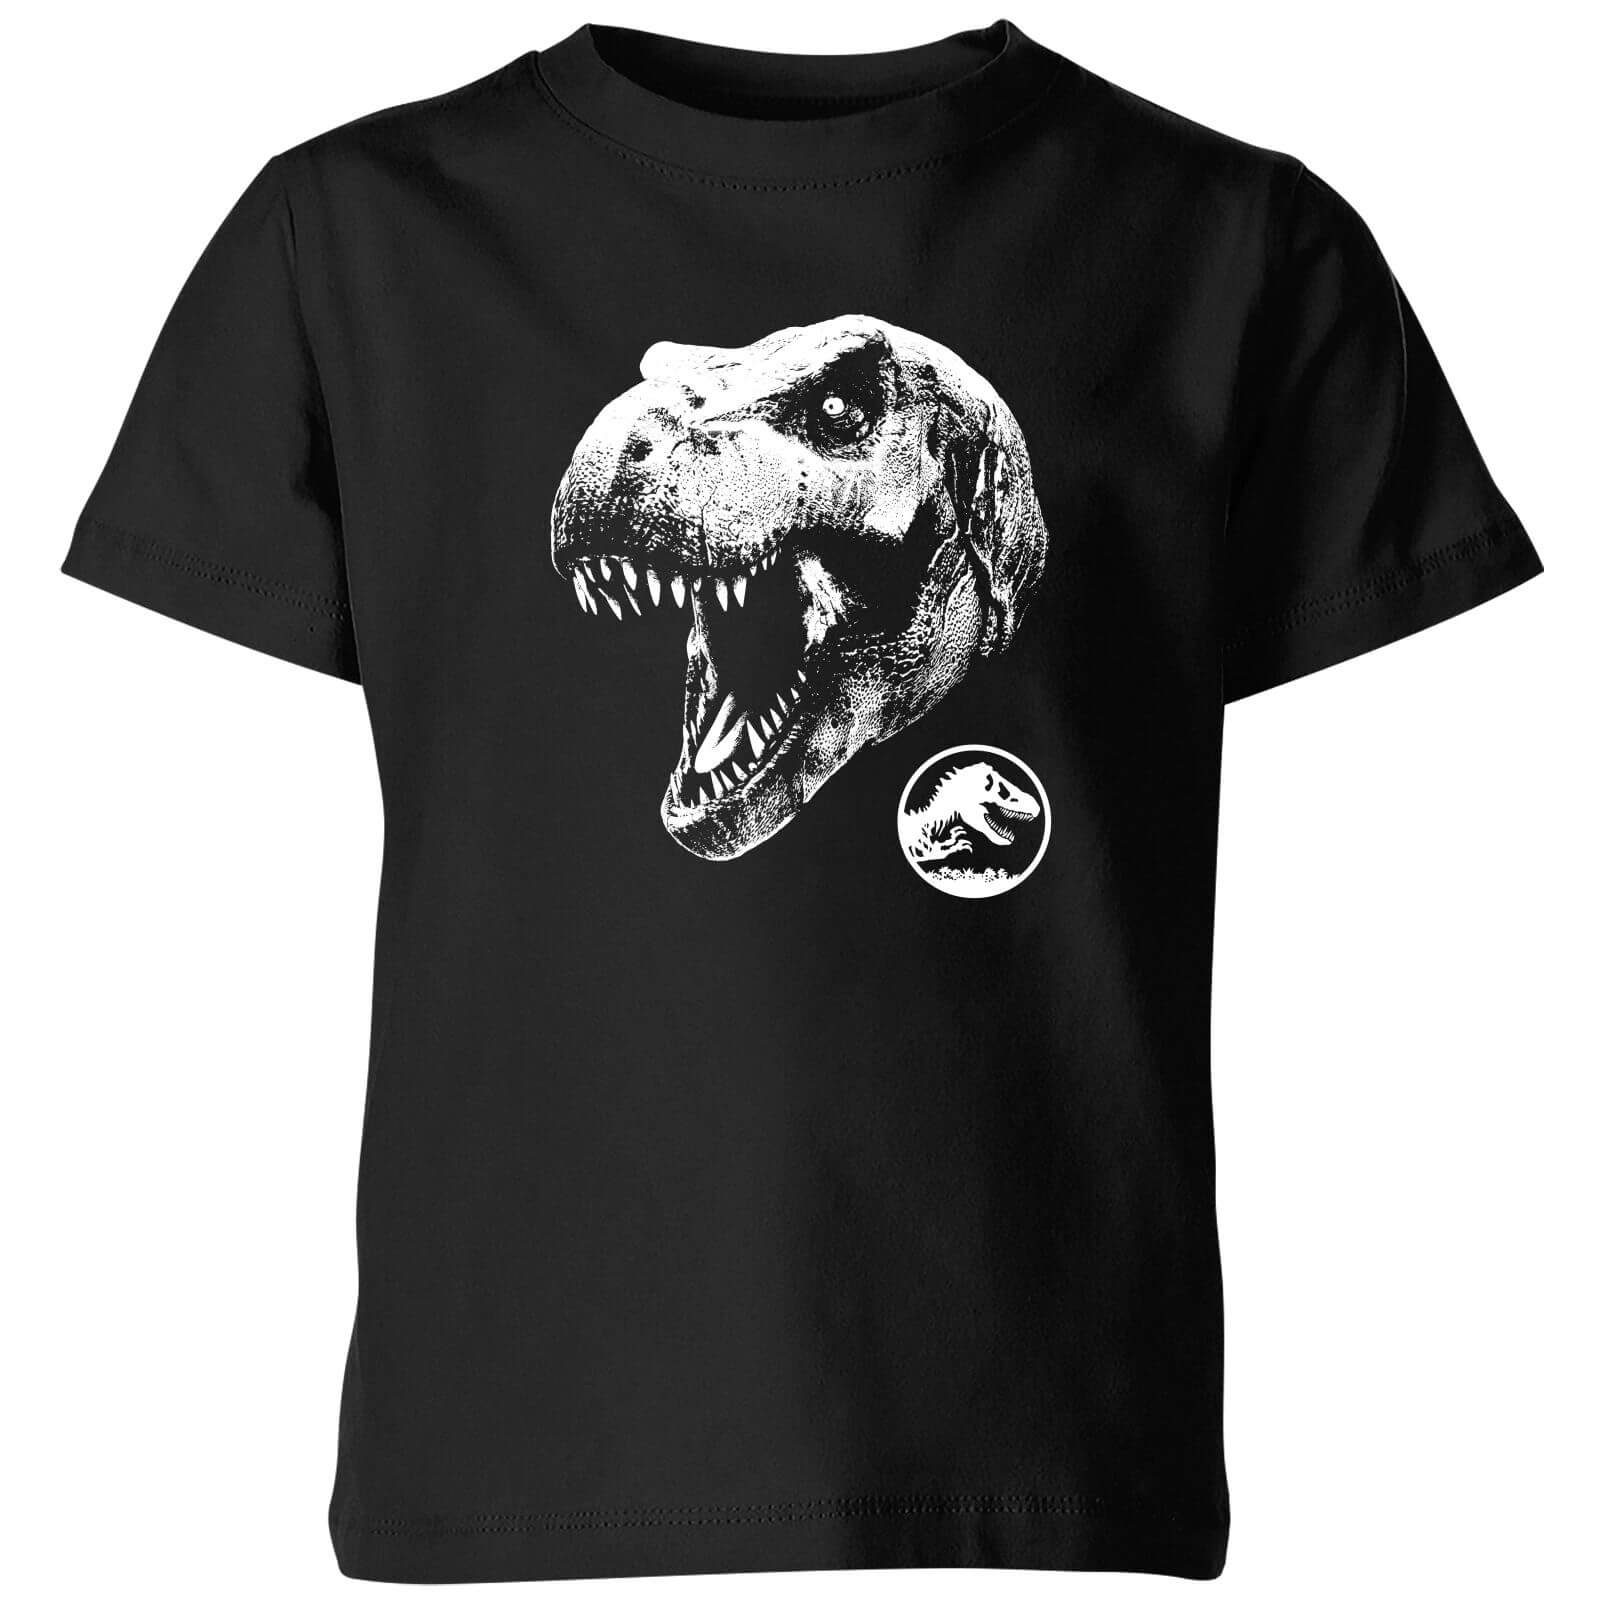 Jurassic Park T Rex Kids' T-Shirt - Black - 11-12 Years - Black